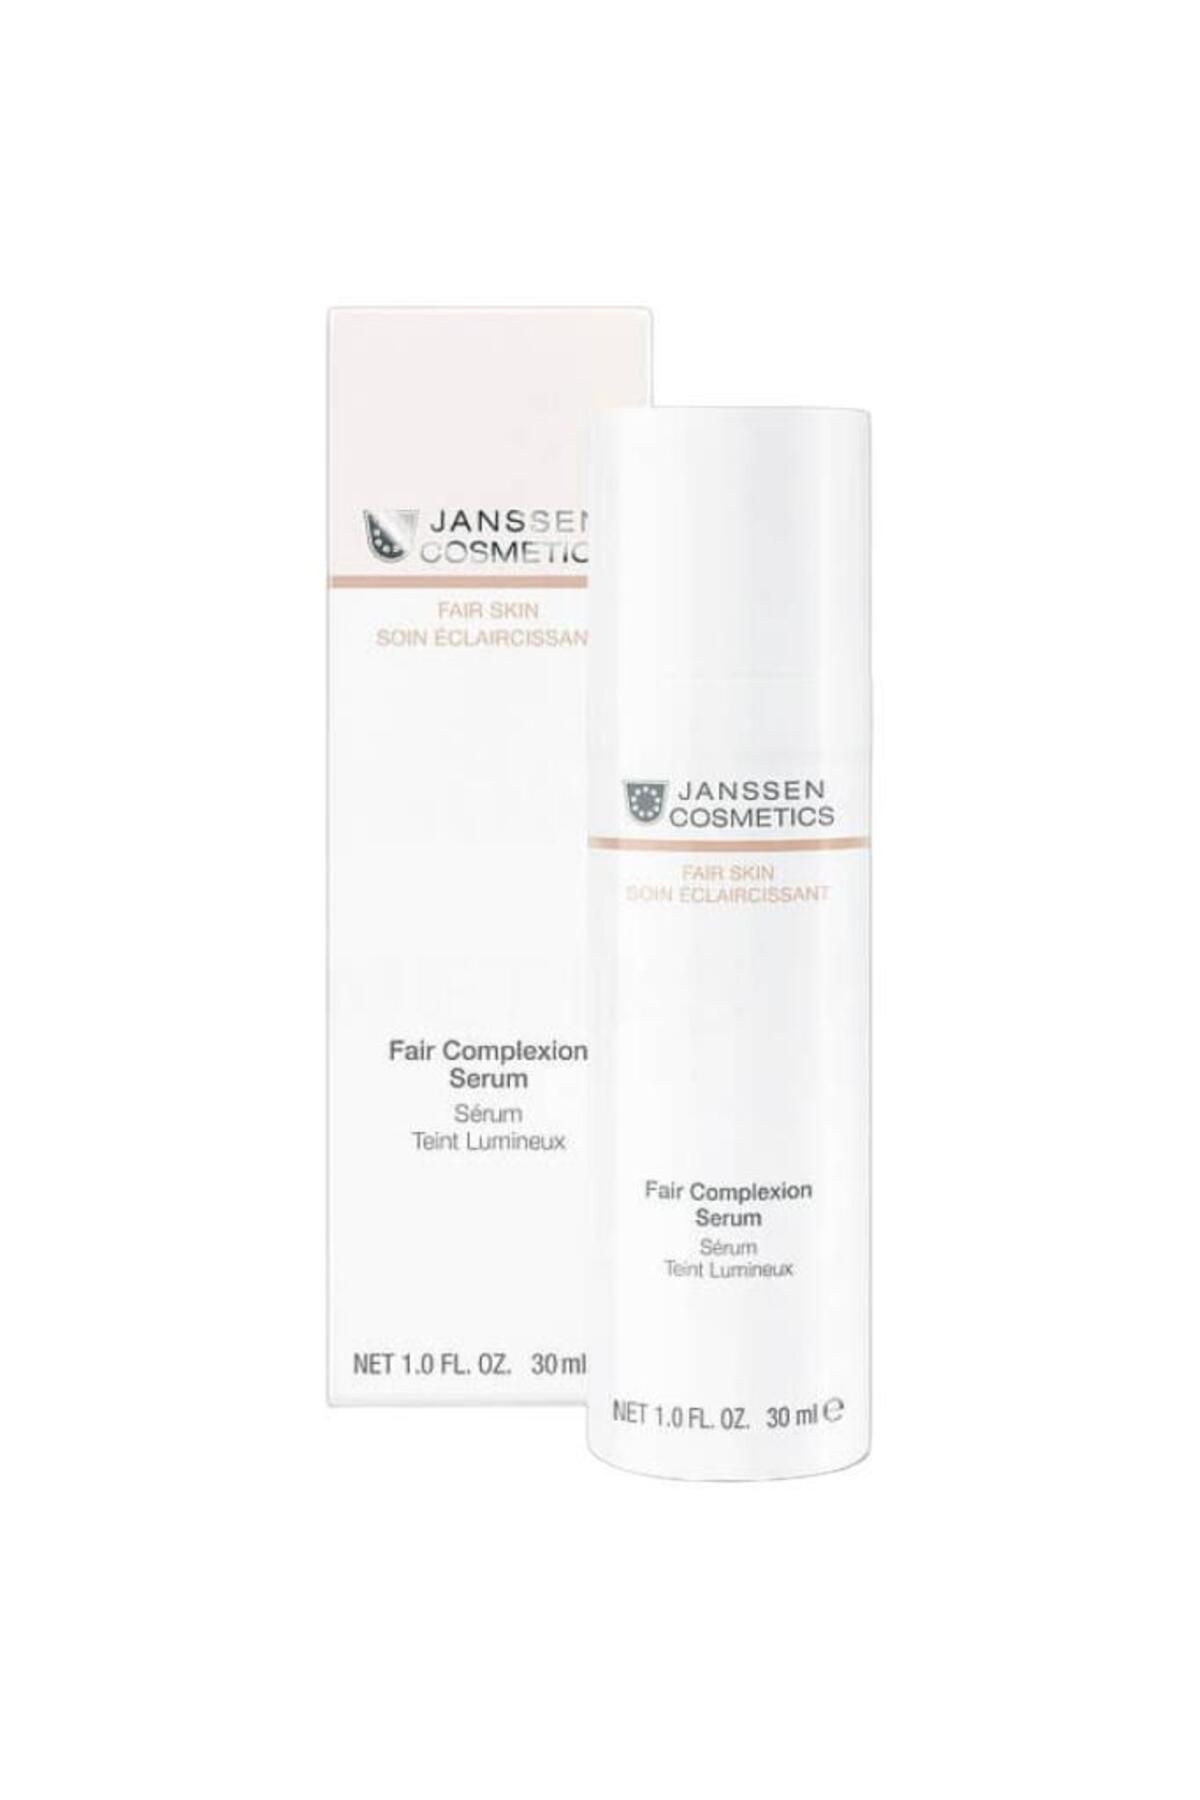 Janssen Cosmetics Fair Complexion Cilt Lekelenmesine Karşı Renk Açıcı Serum 30 ml